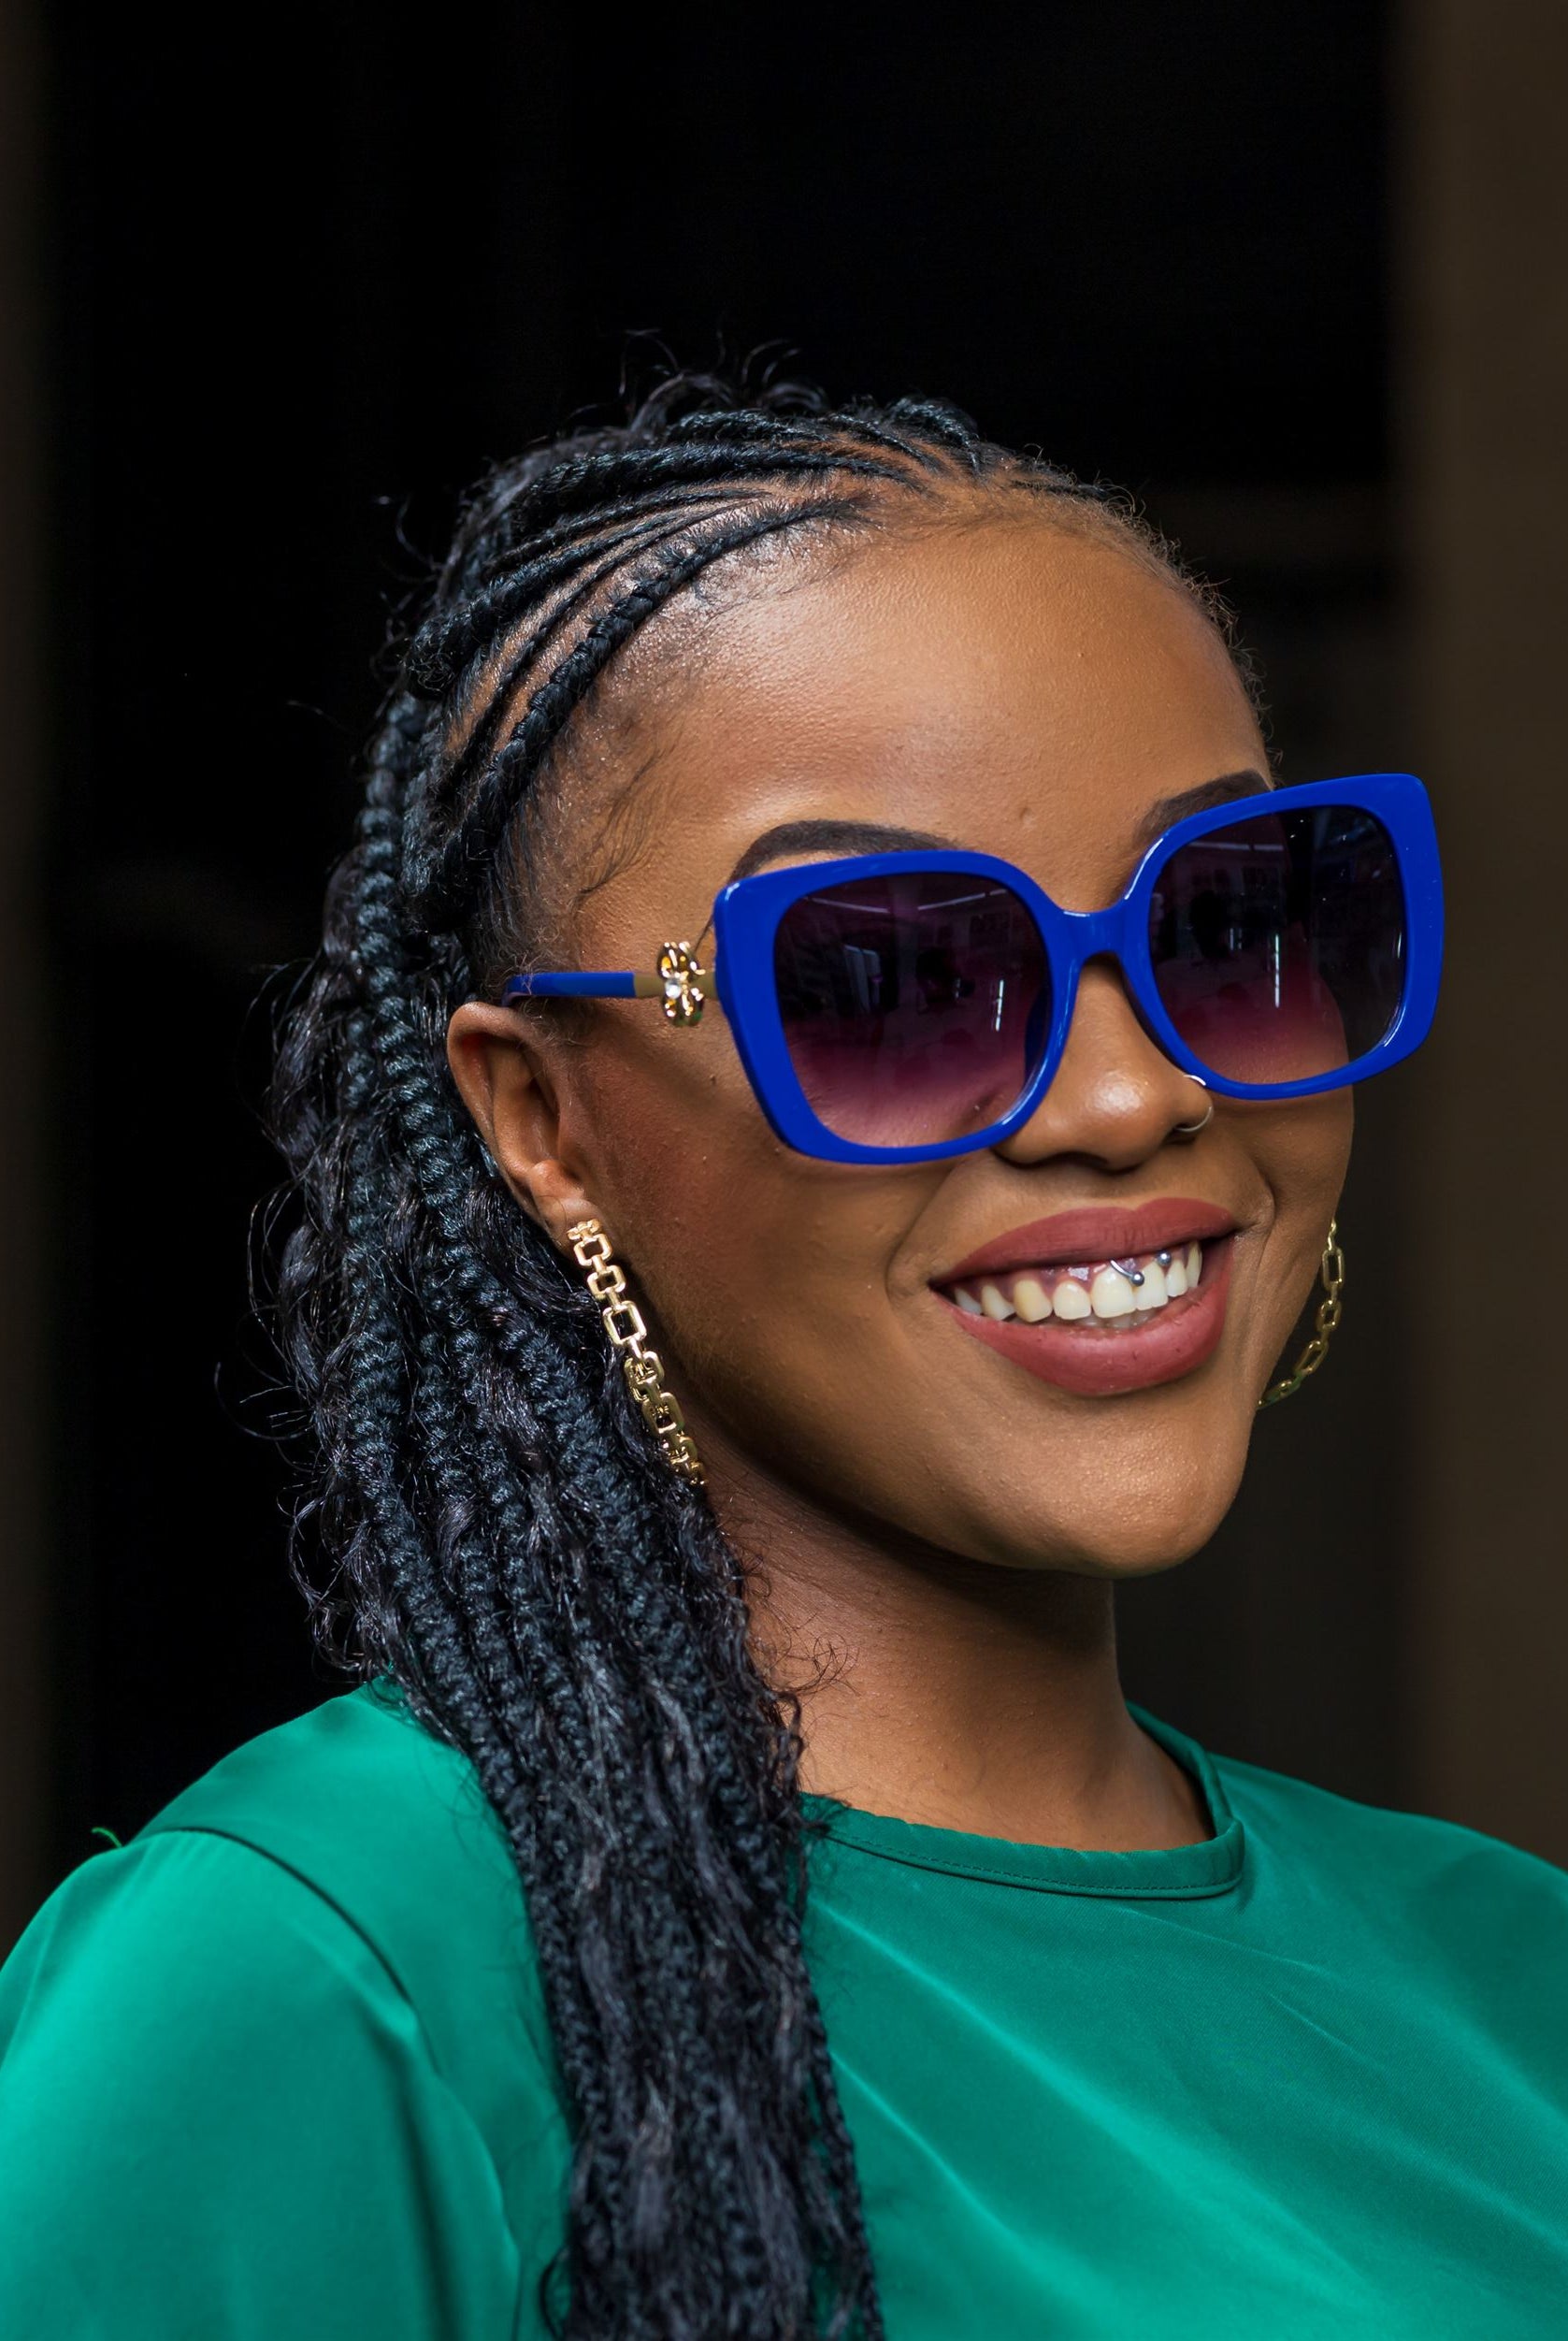 Shade Parade Sunglasses - Blue - Shop Kenya - Affordable Fashion Shade Parade Sunglasses - Blue hiiii_style accessories Sunglasses shade-parade-sunglasses-blue model_muringo Shop Kenya - Affordable Fashion